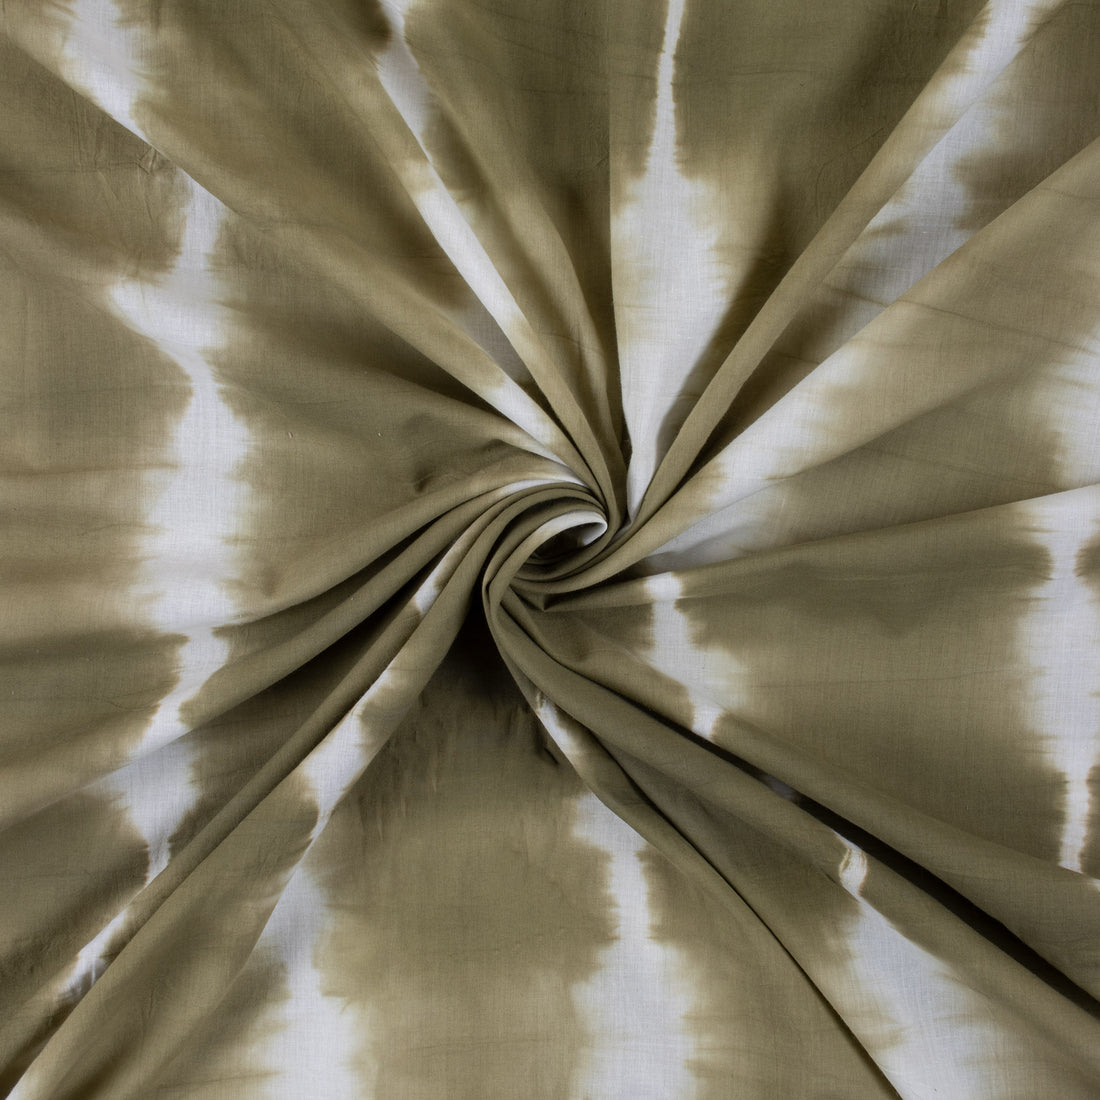 Handmade Shibori Tie Dye Cotton Fabric